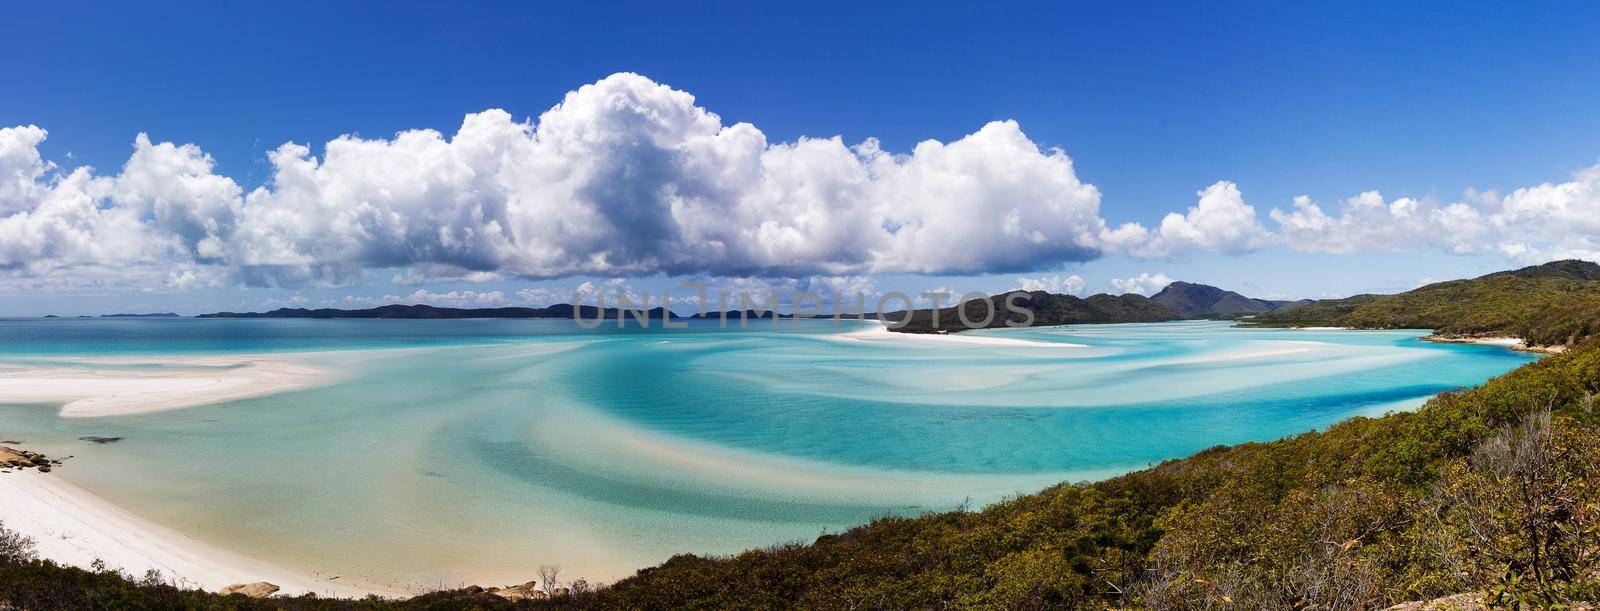 Panorama of Whiteheaven beach, Whitsunday Island, Queensland, Australia by bettercallcurry